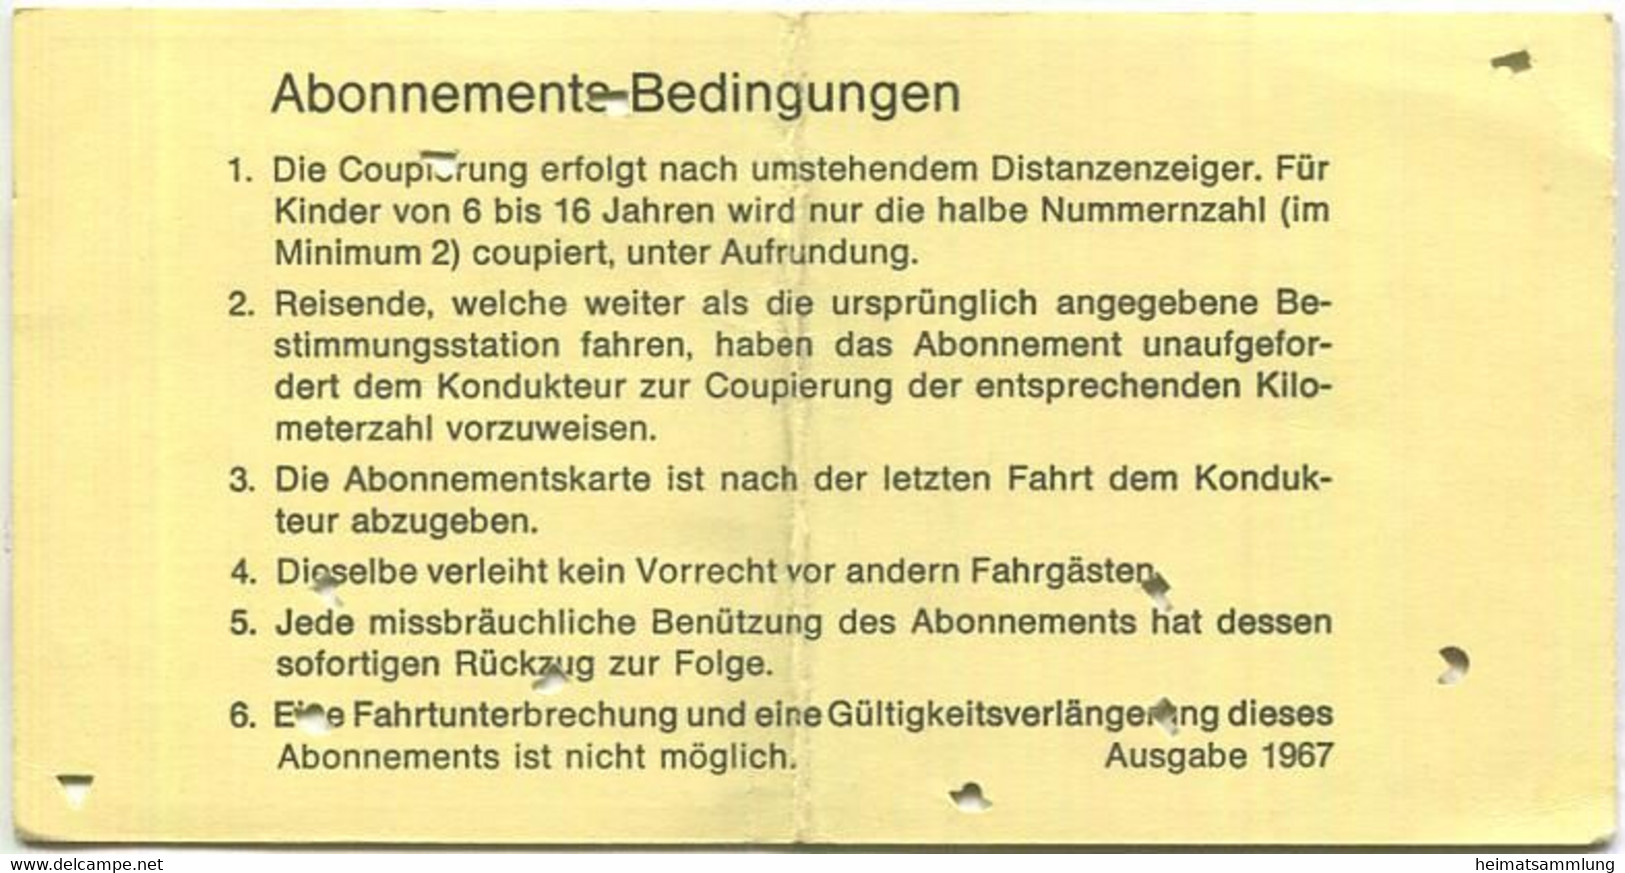 Schweiz - Solothurn-Niederbipp-Bahn - SNB 100 Km Inhaber-Abonnements-Karte - Fahrkarte 1968 Taxe Fr. 10.- - Europe